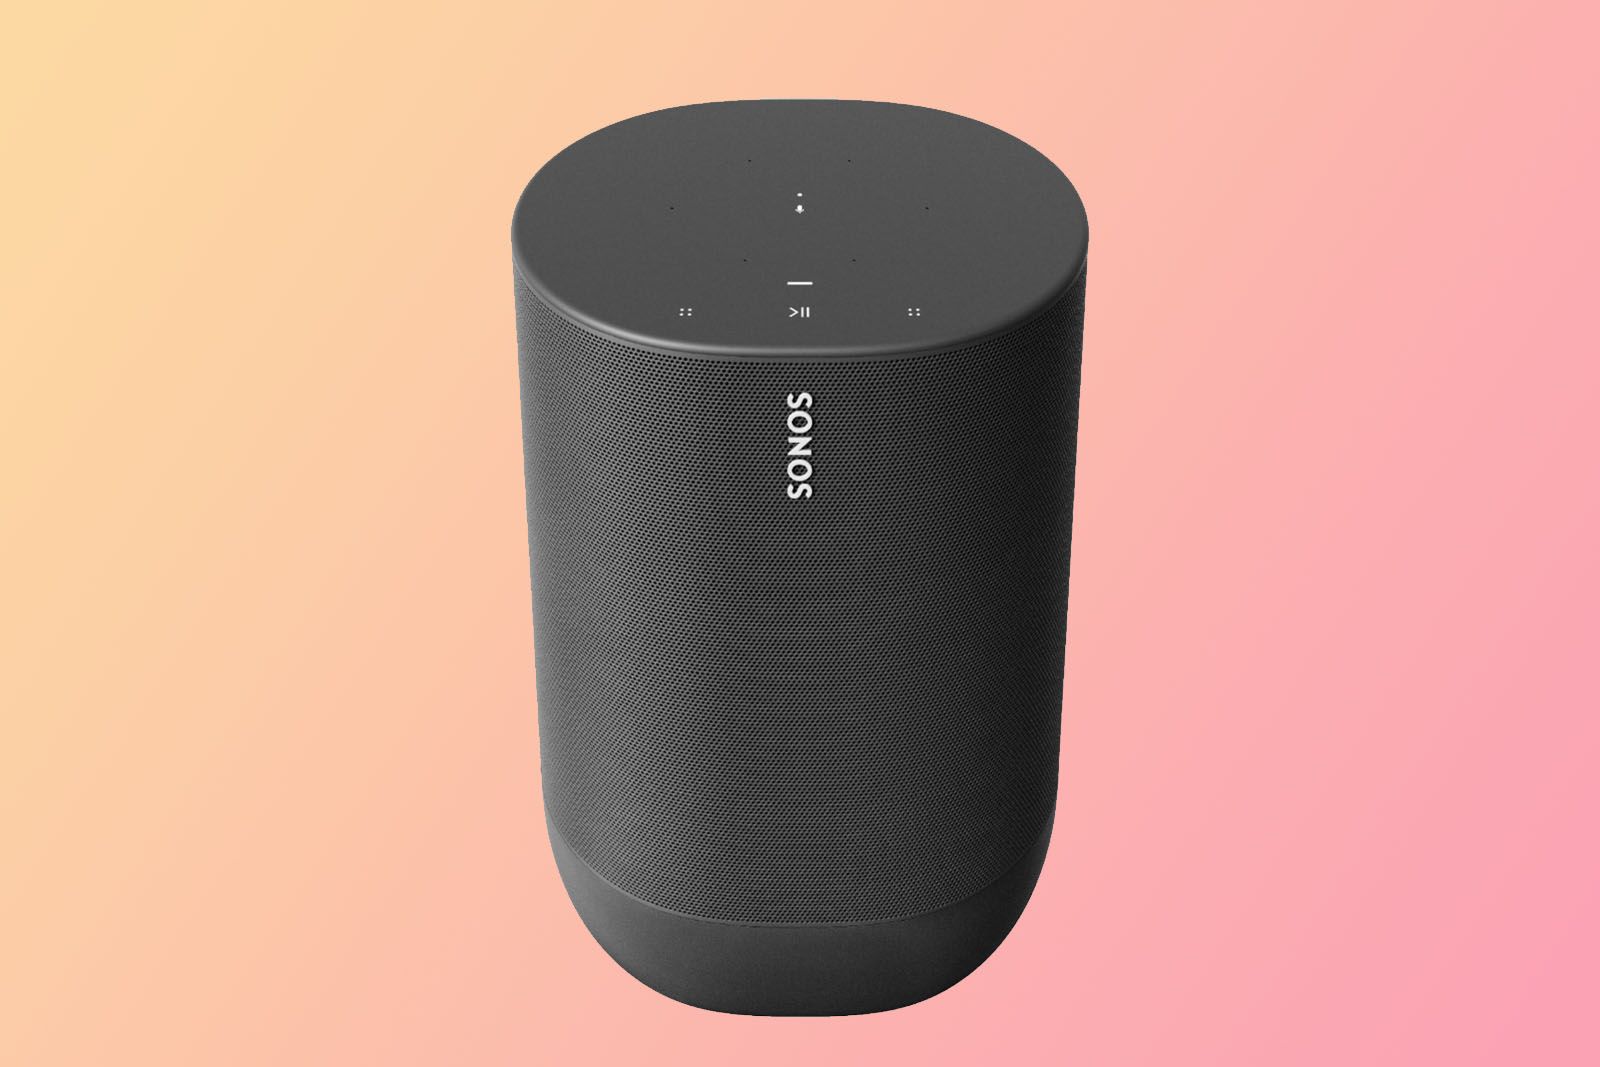 Details of a Sonos portable Bluetooth speaker have leaked image 1